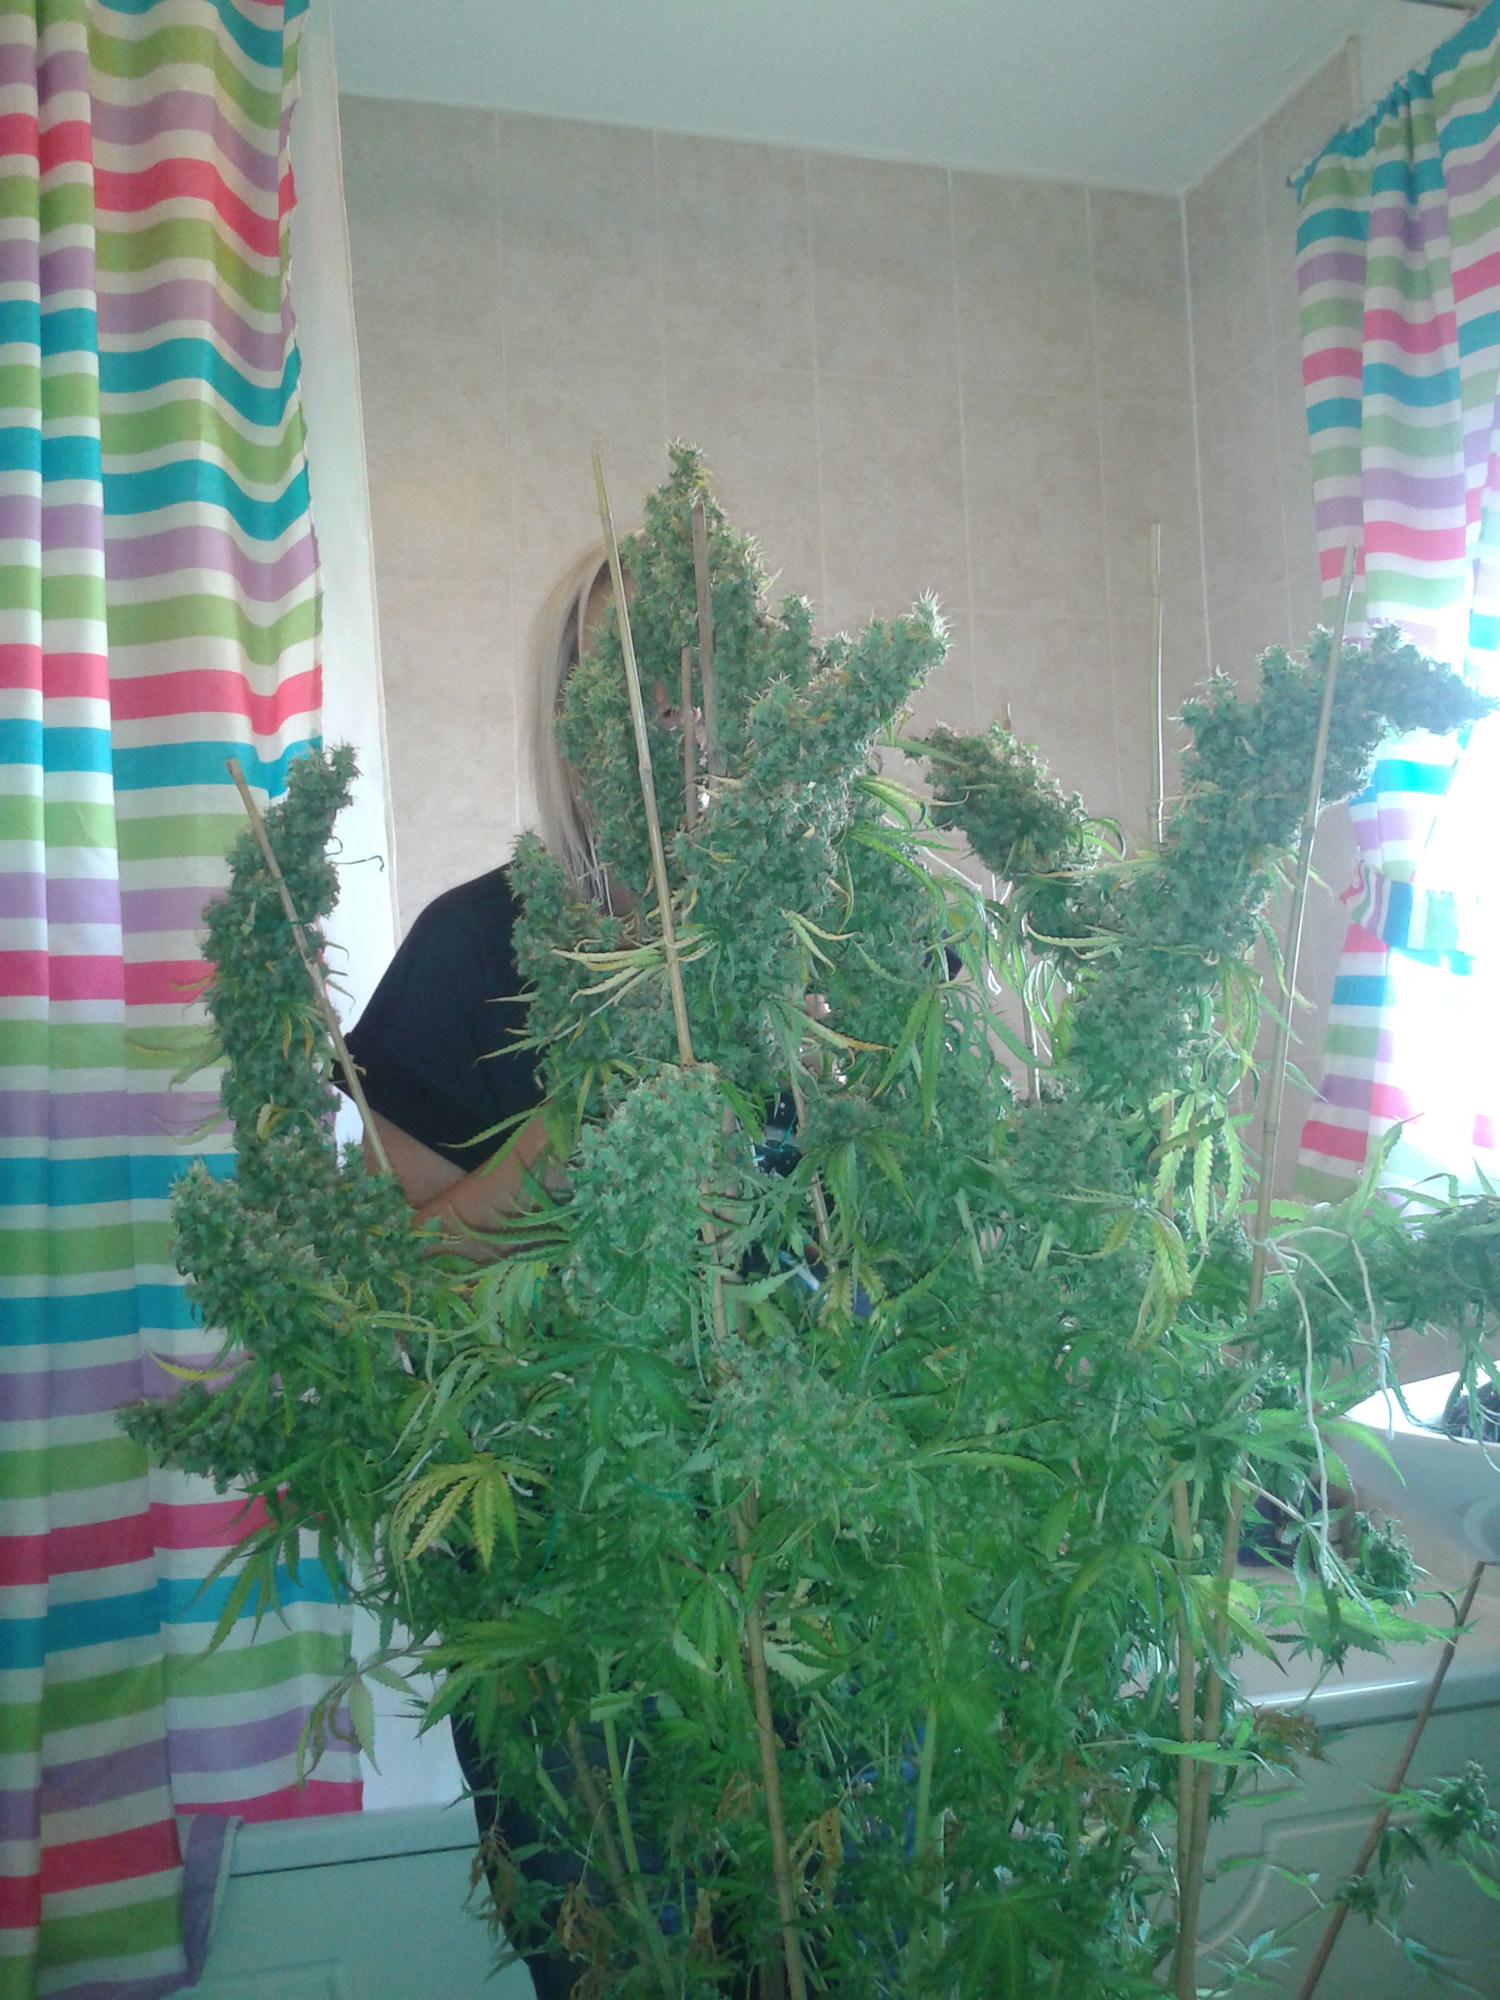 Skunk easy growing cannabis